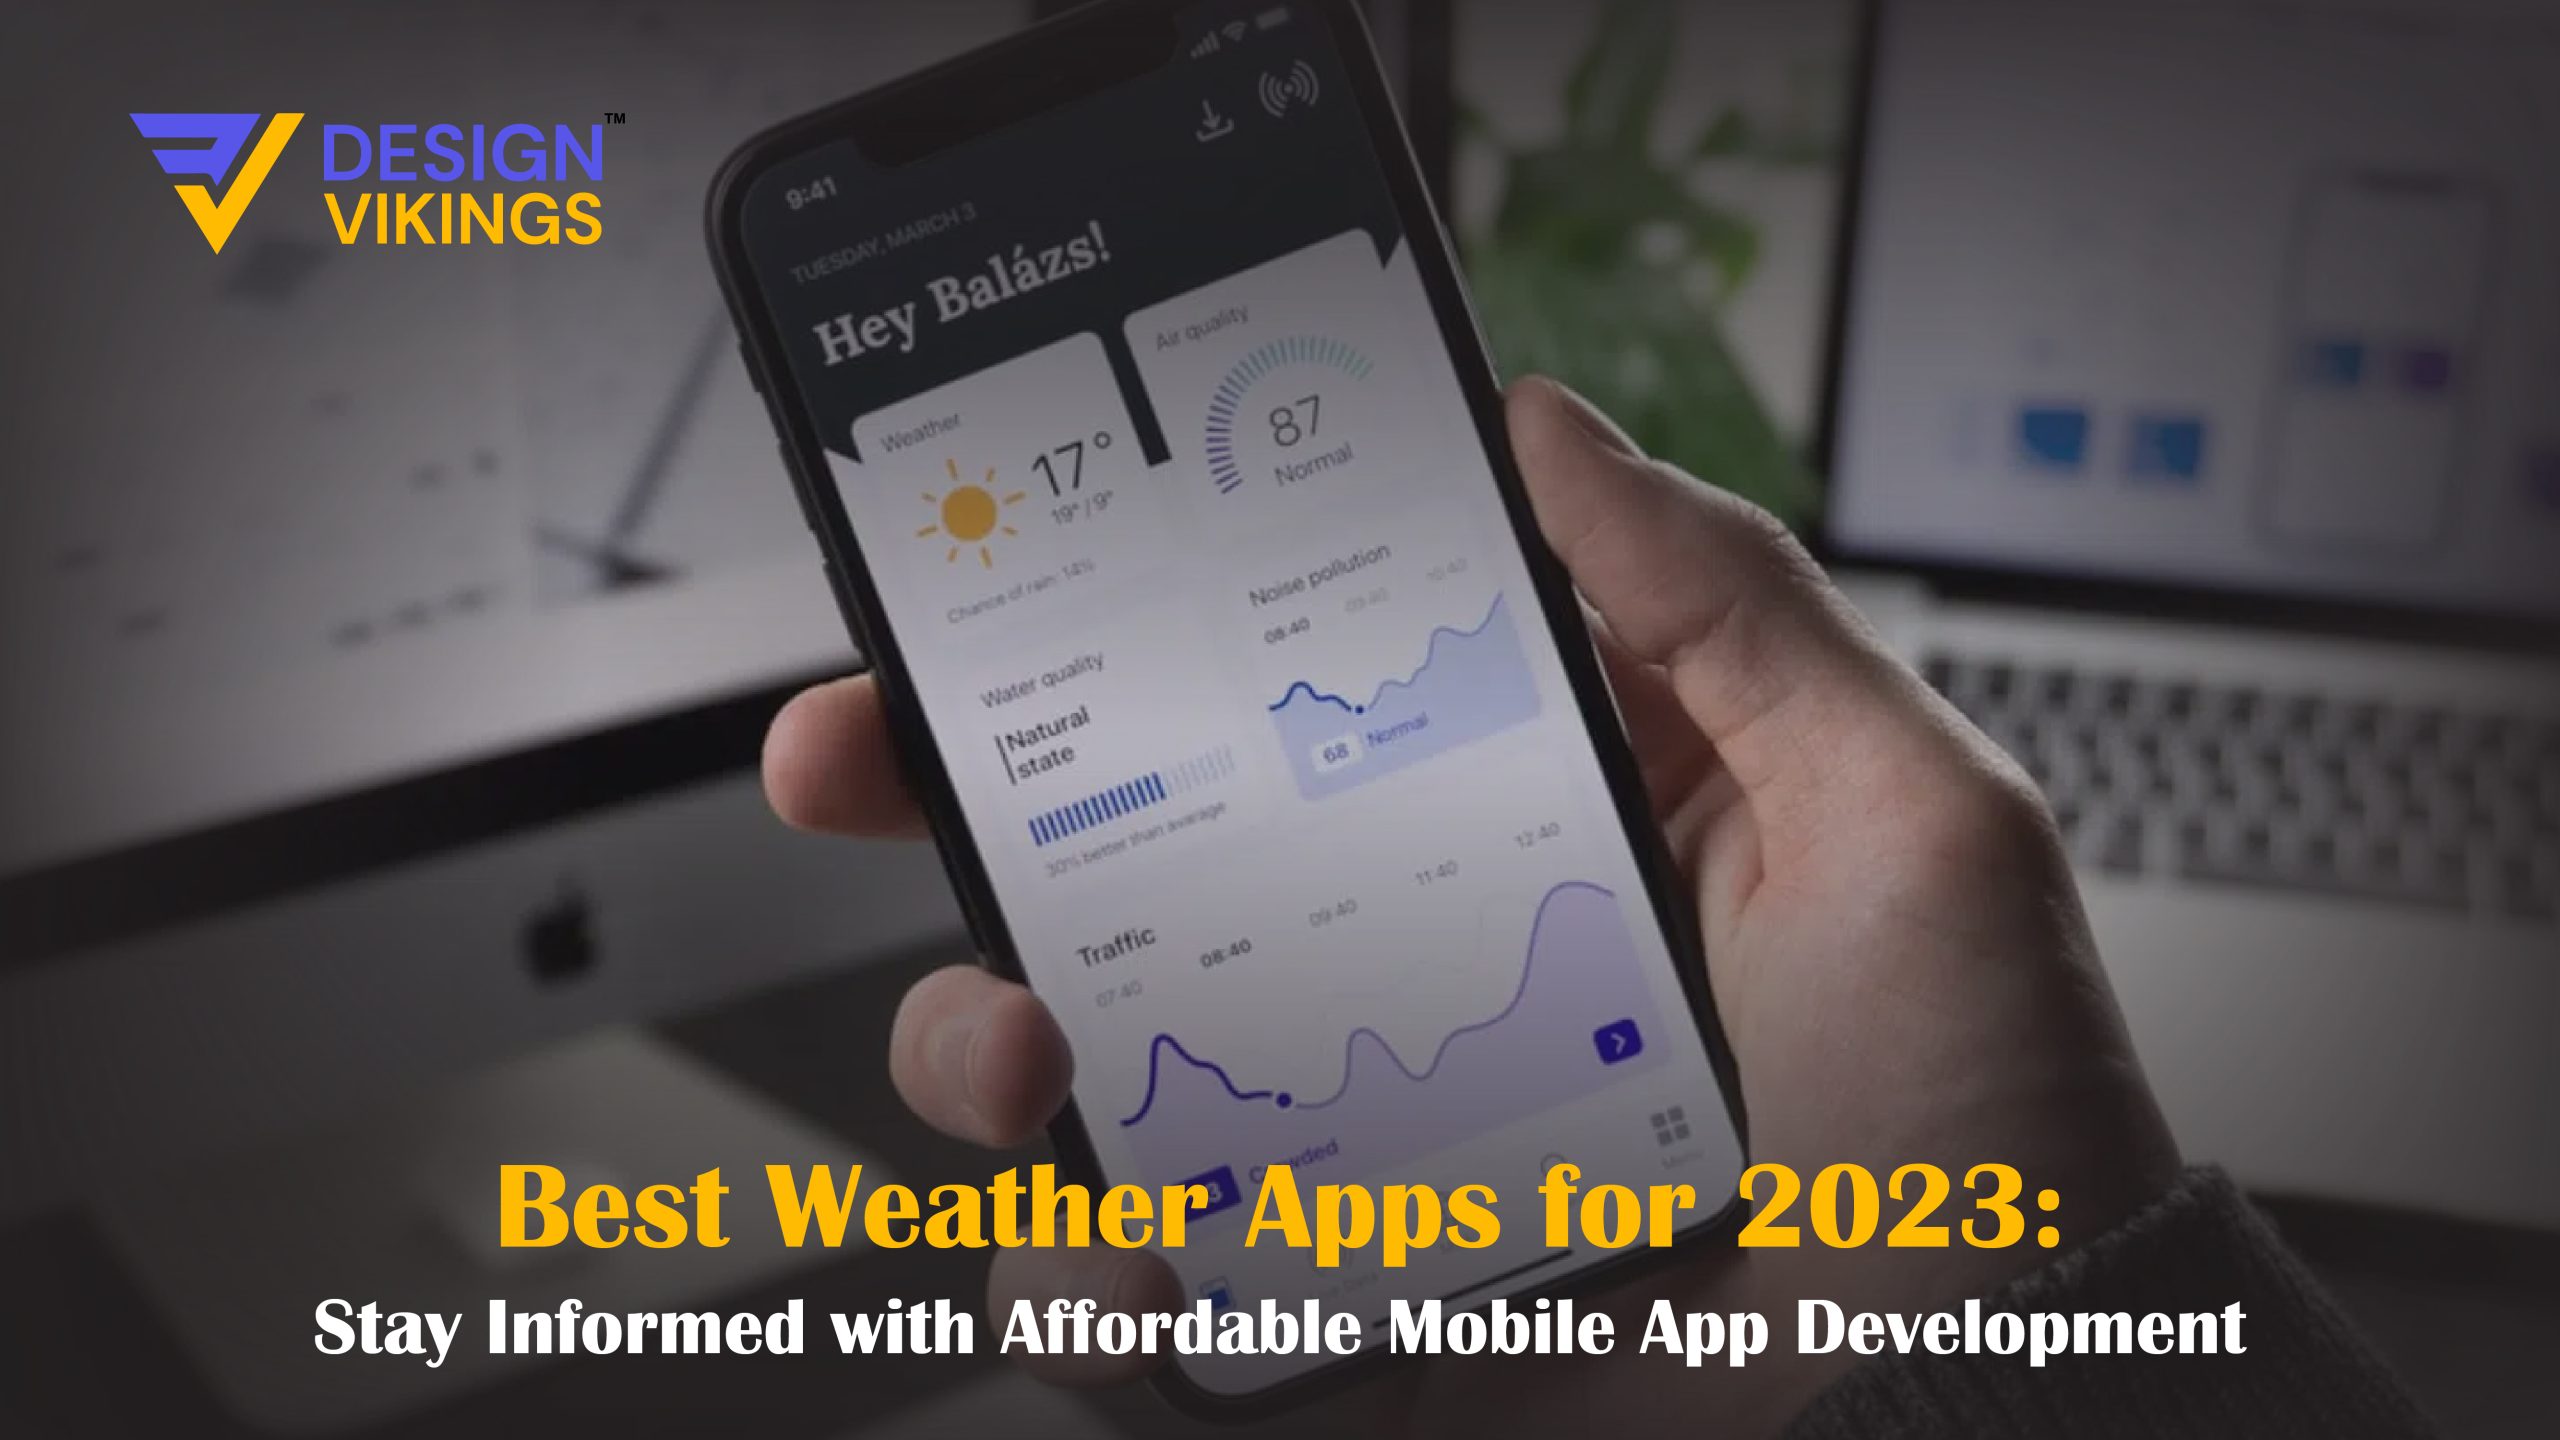 Weather Apps Design Vikings